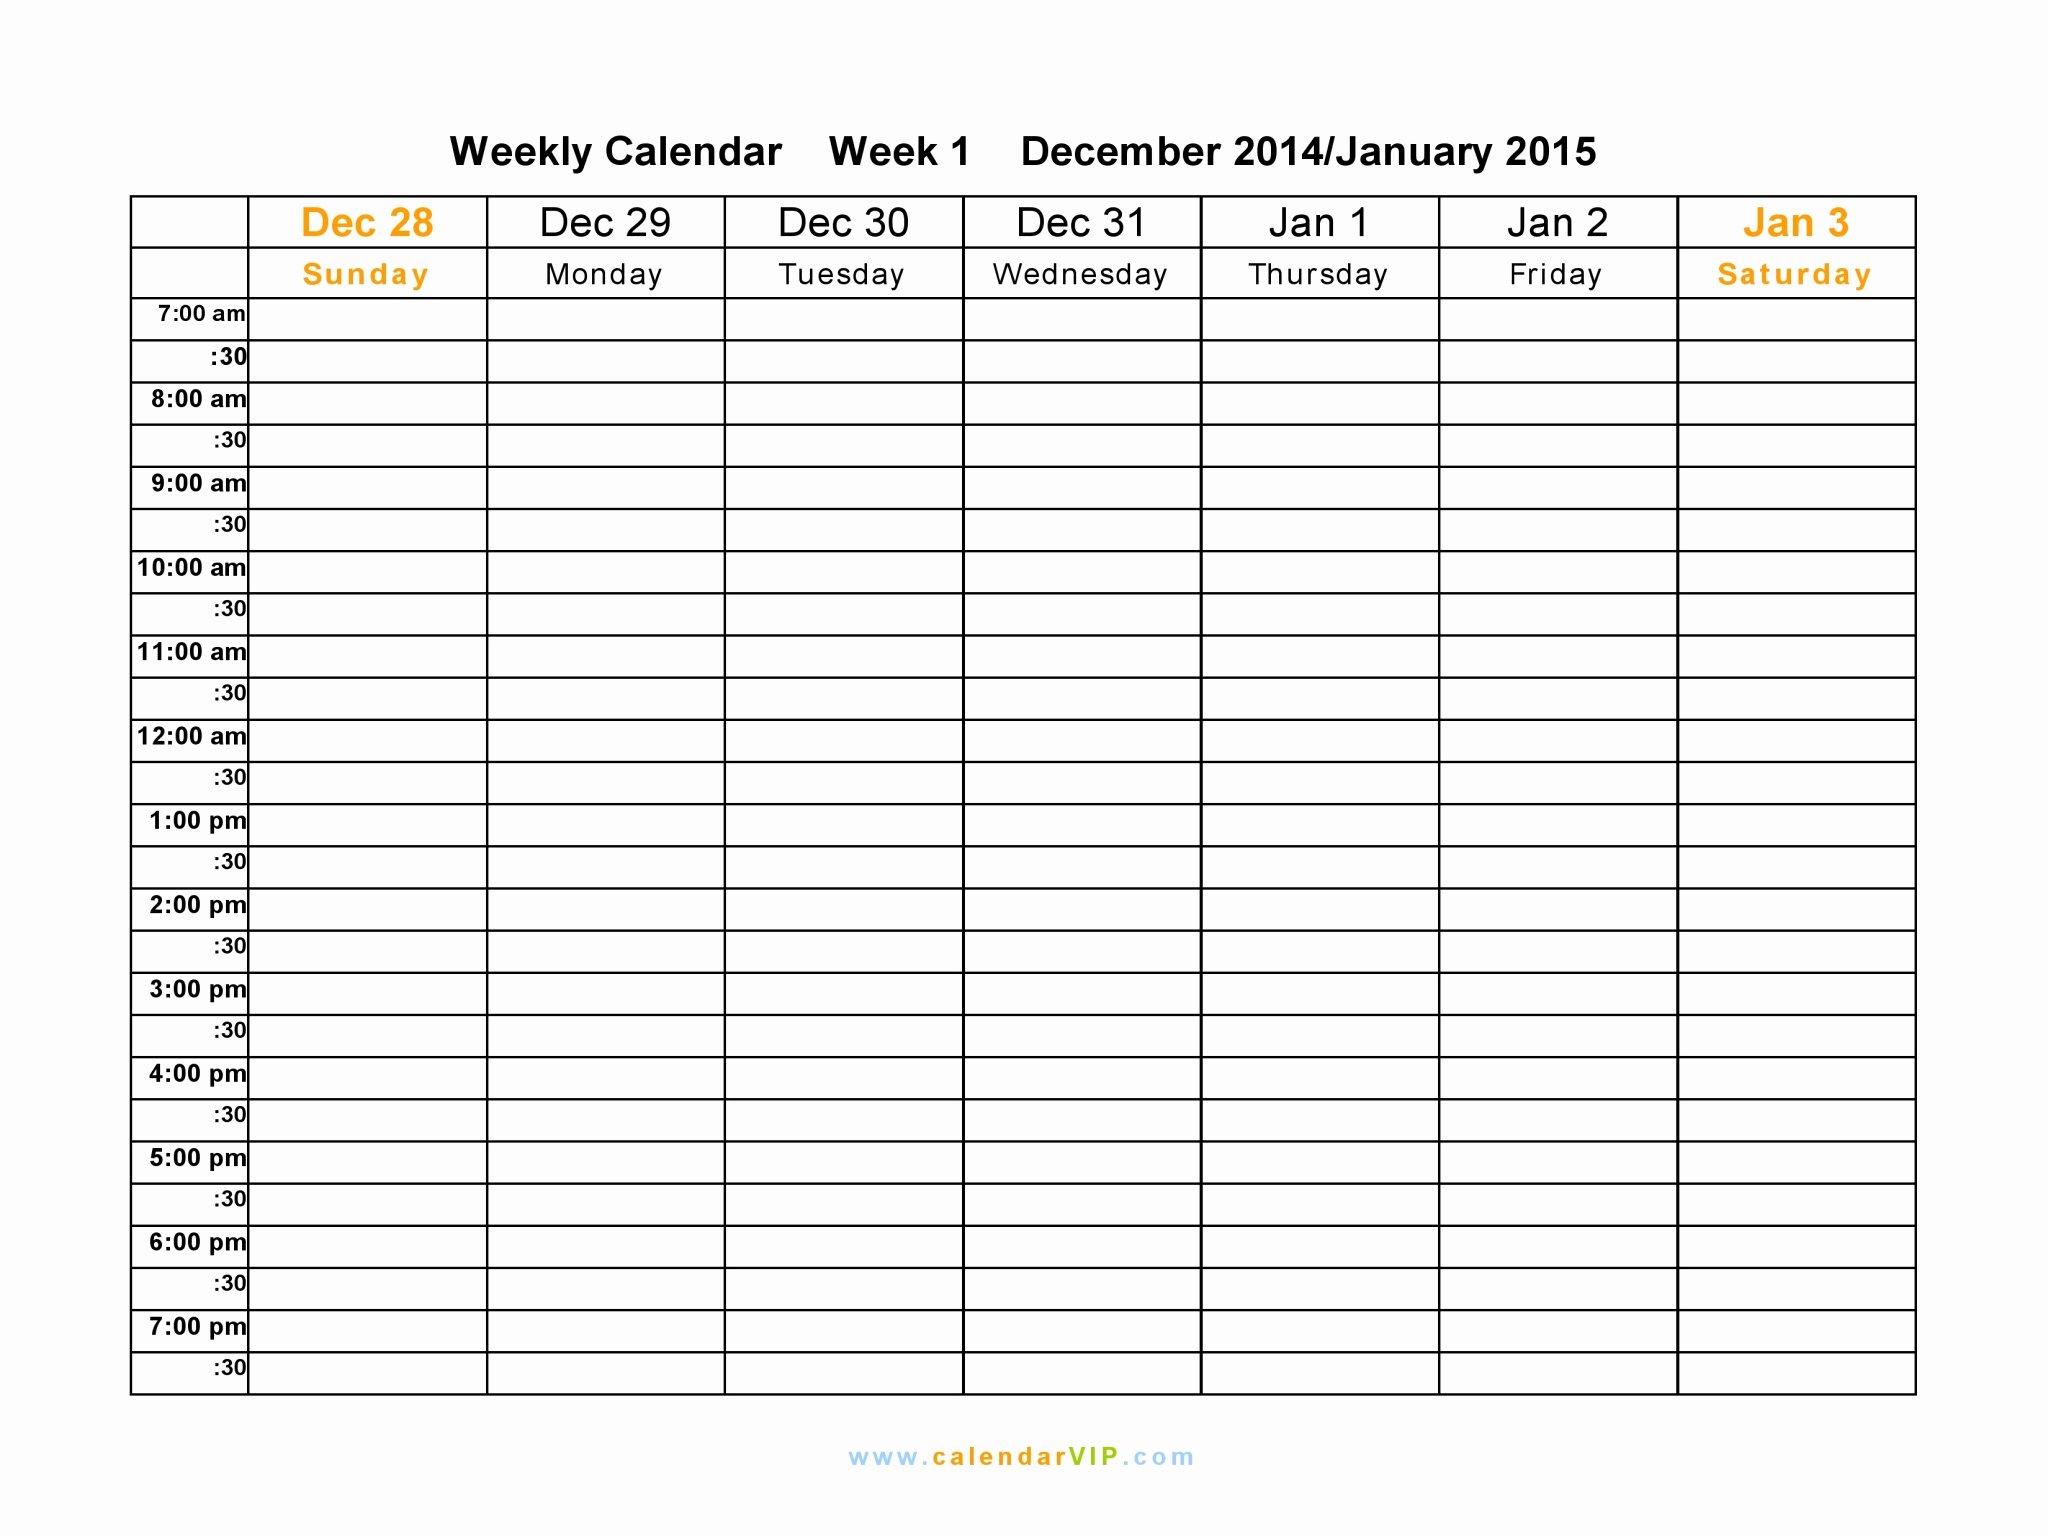 Weekly Calendar Spreadsheet